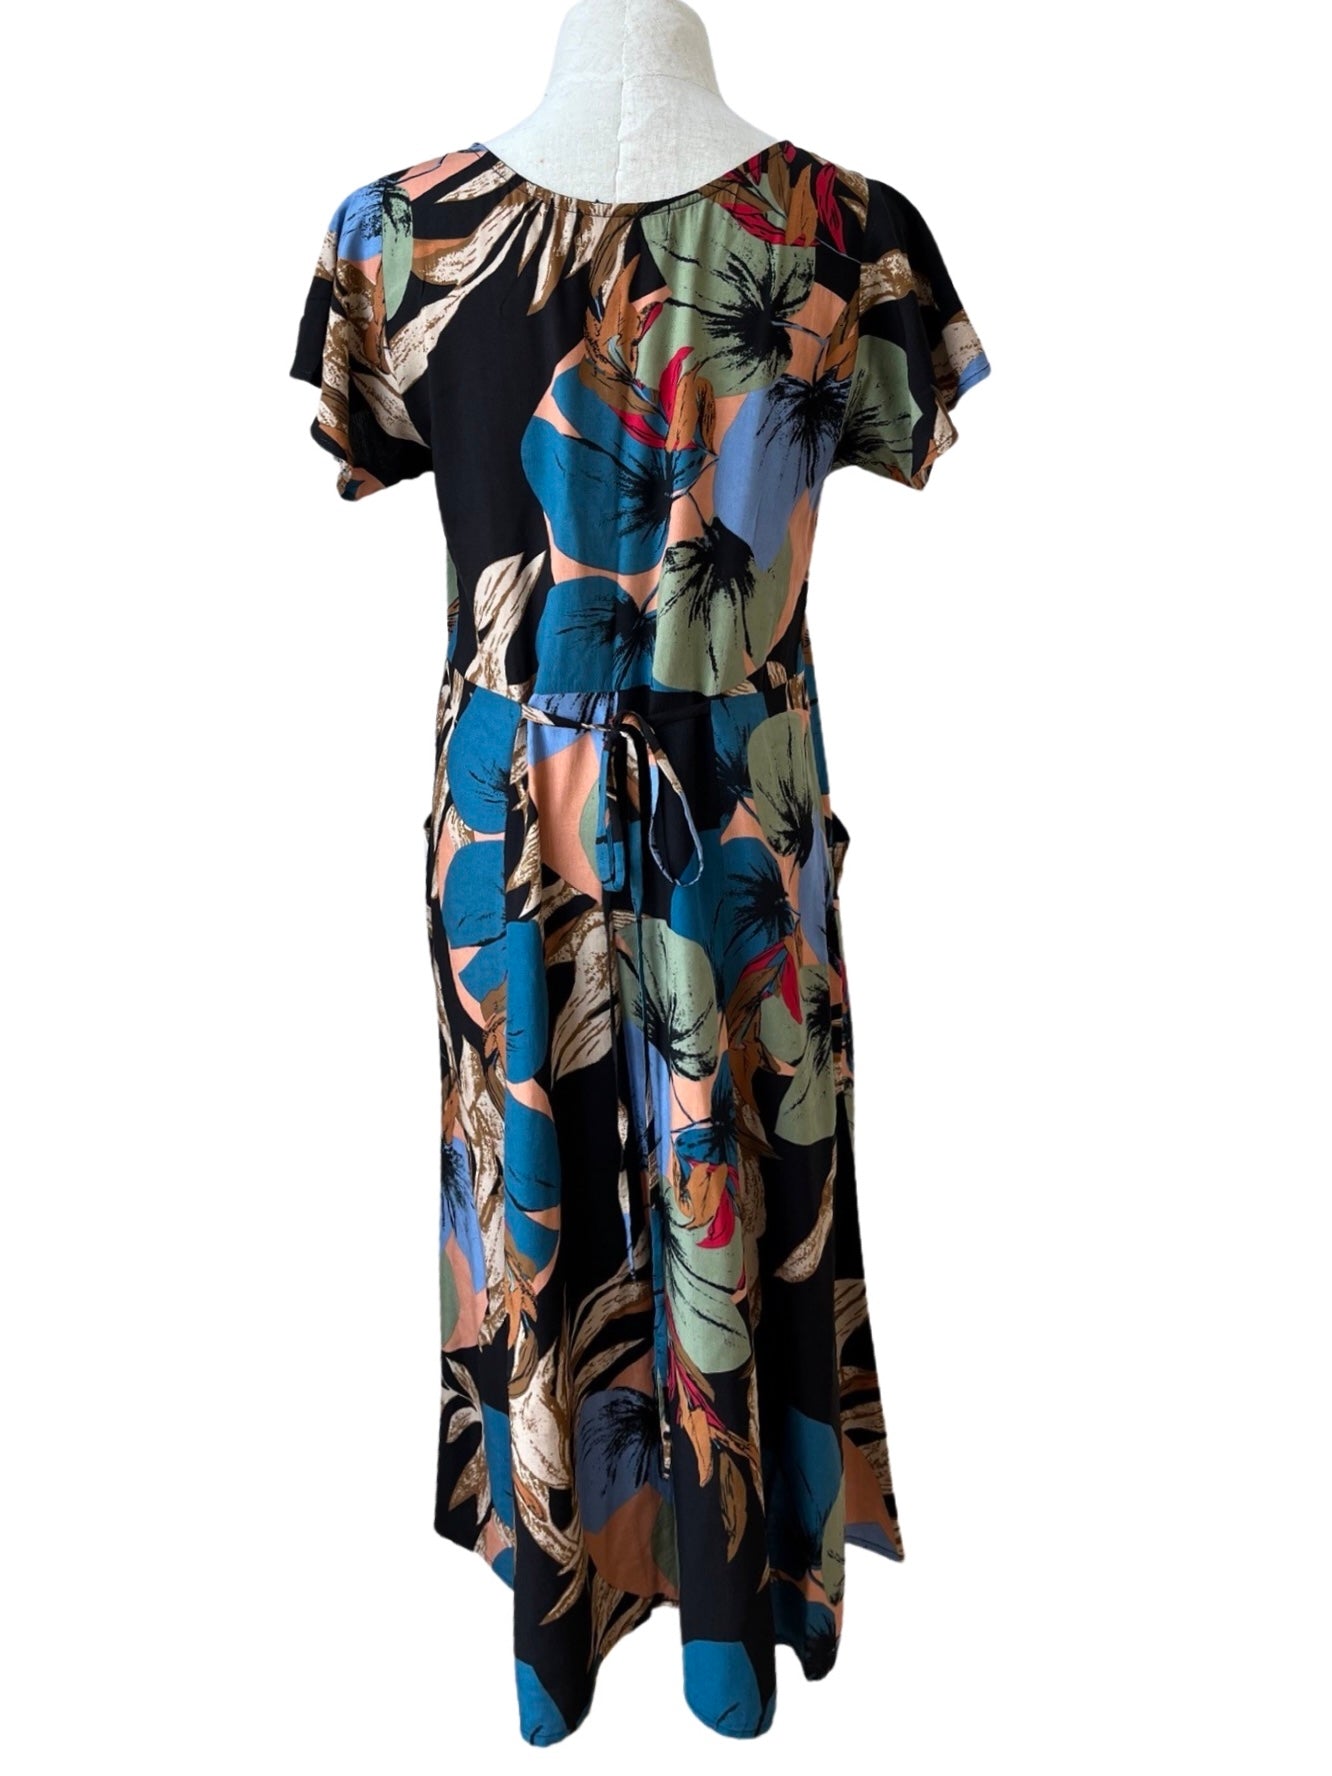 "Lucia" Dress - Jungle Print